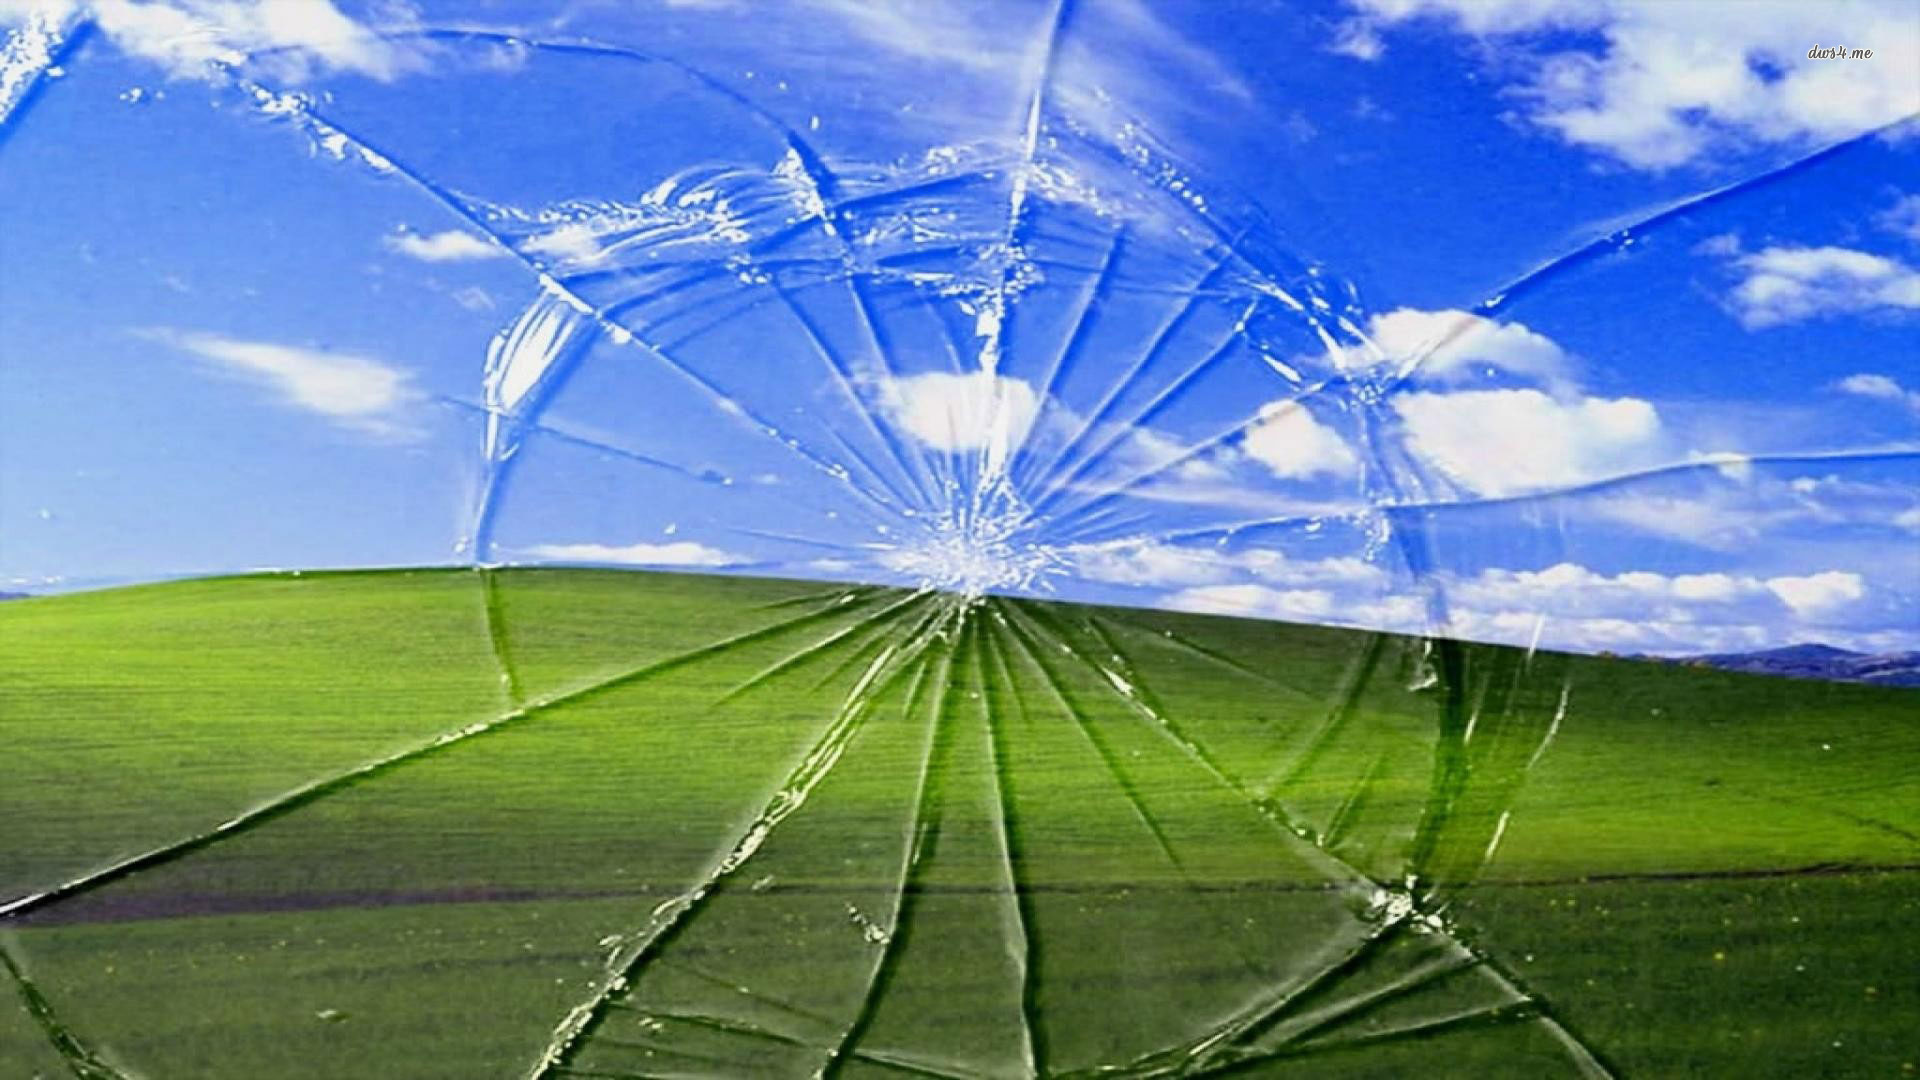 Broken Cracked Screen Windows XP Wallpaper 1080p hd background hd